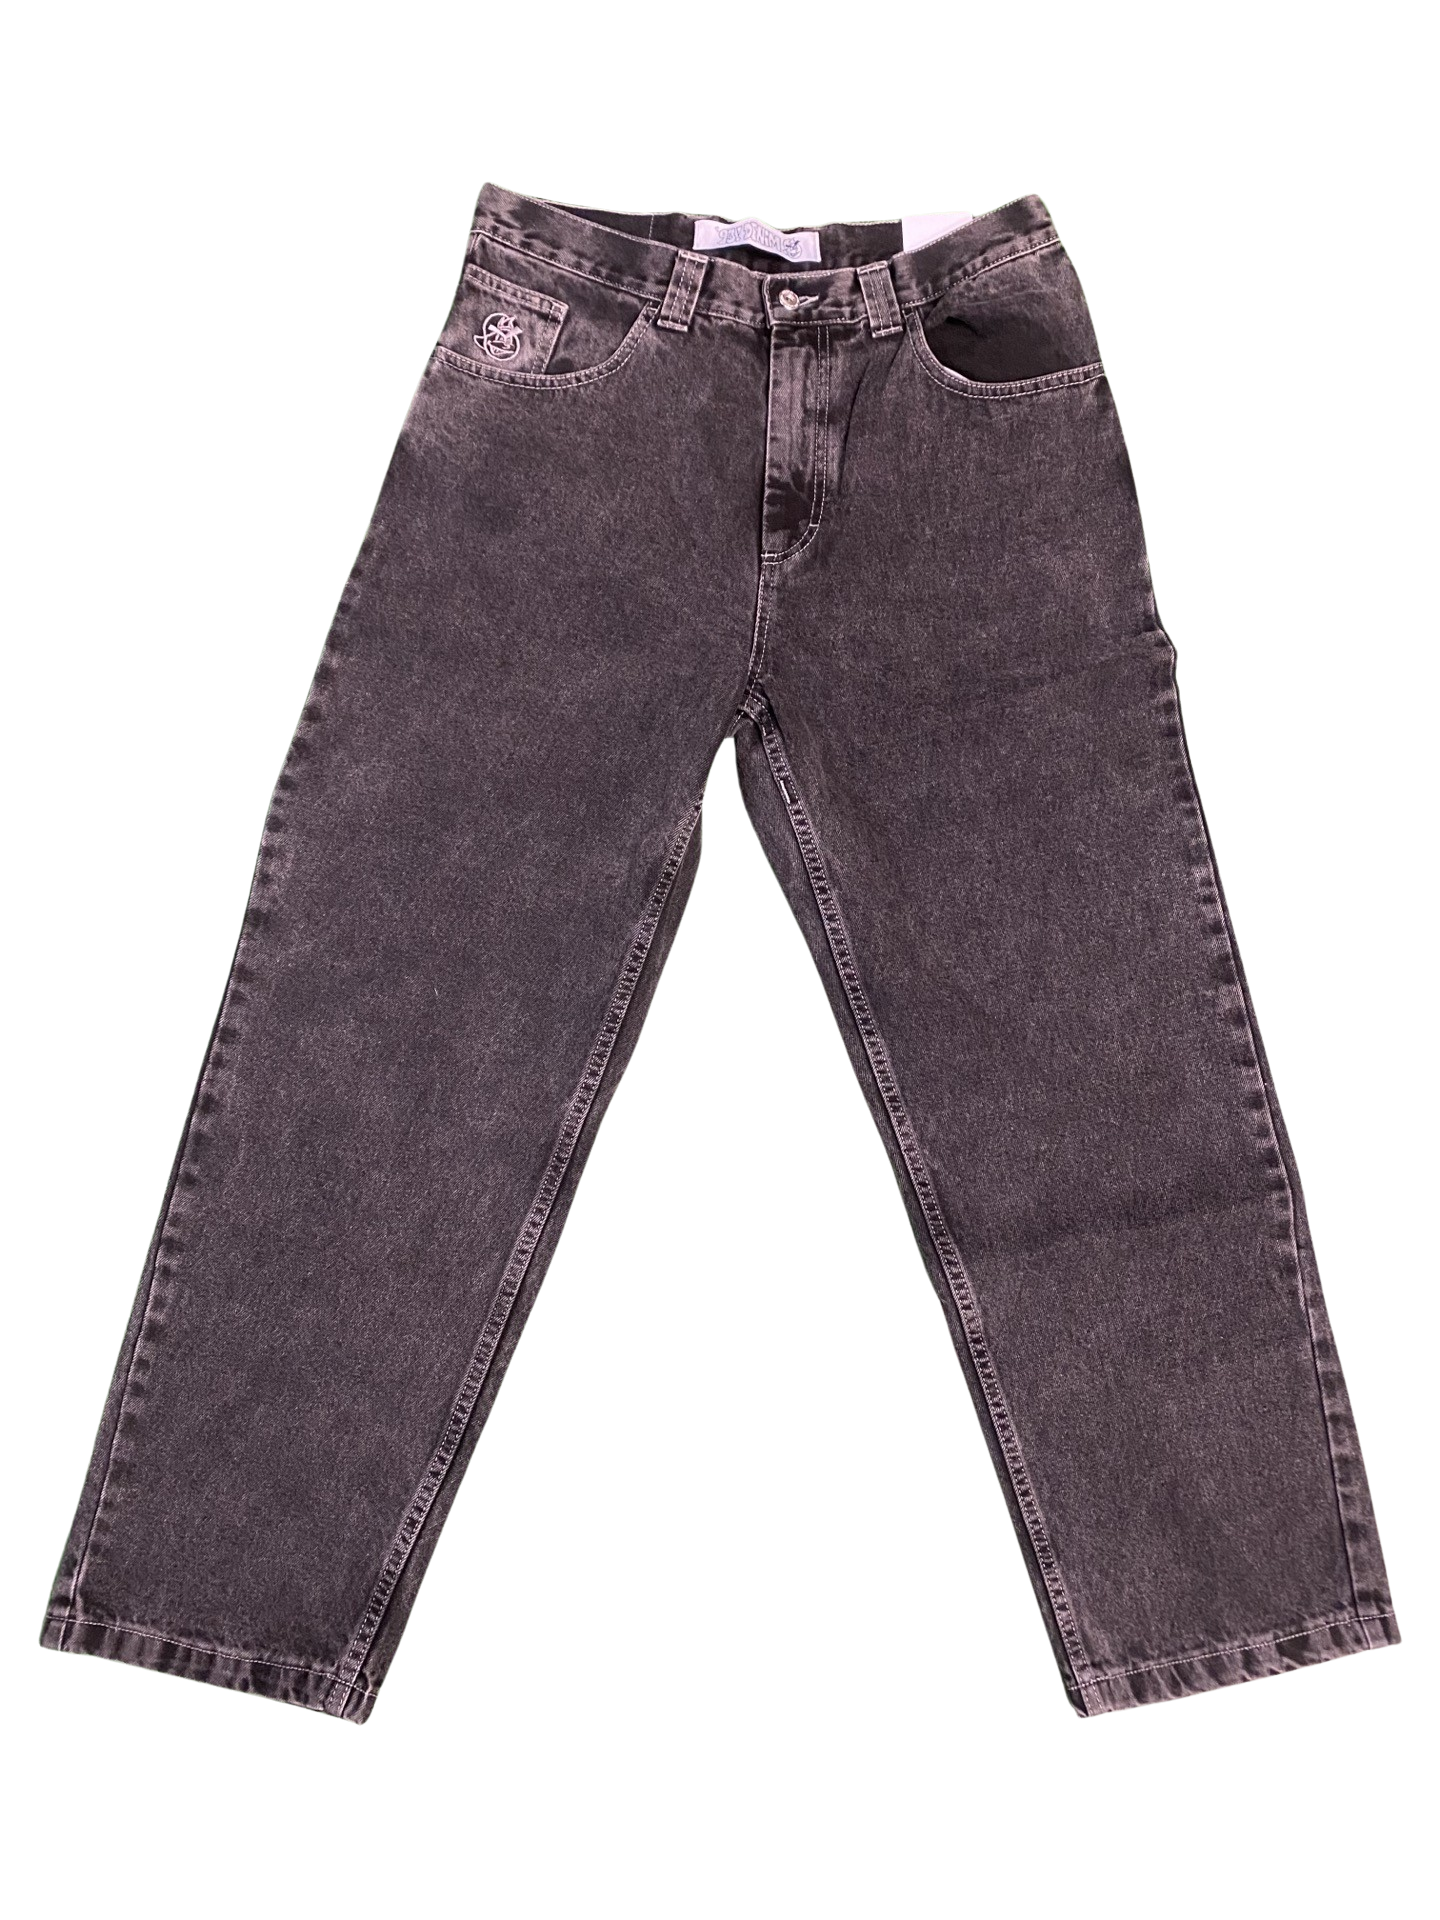 Polar 93 Jeans